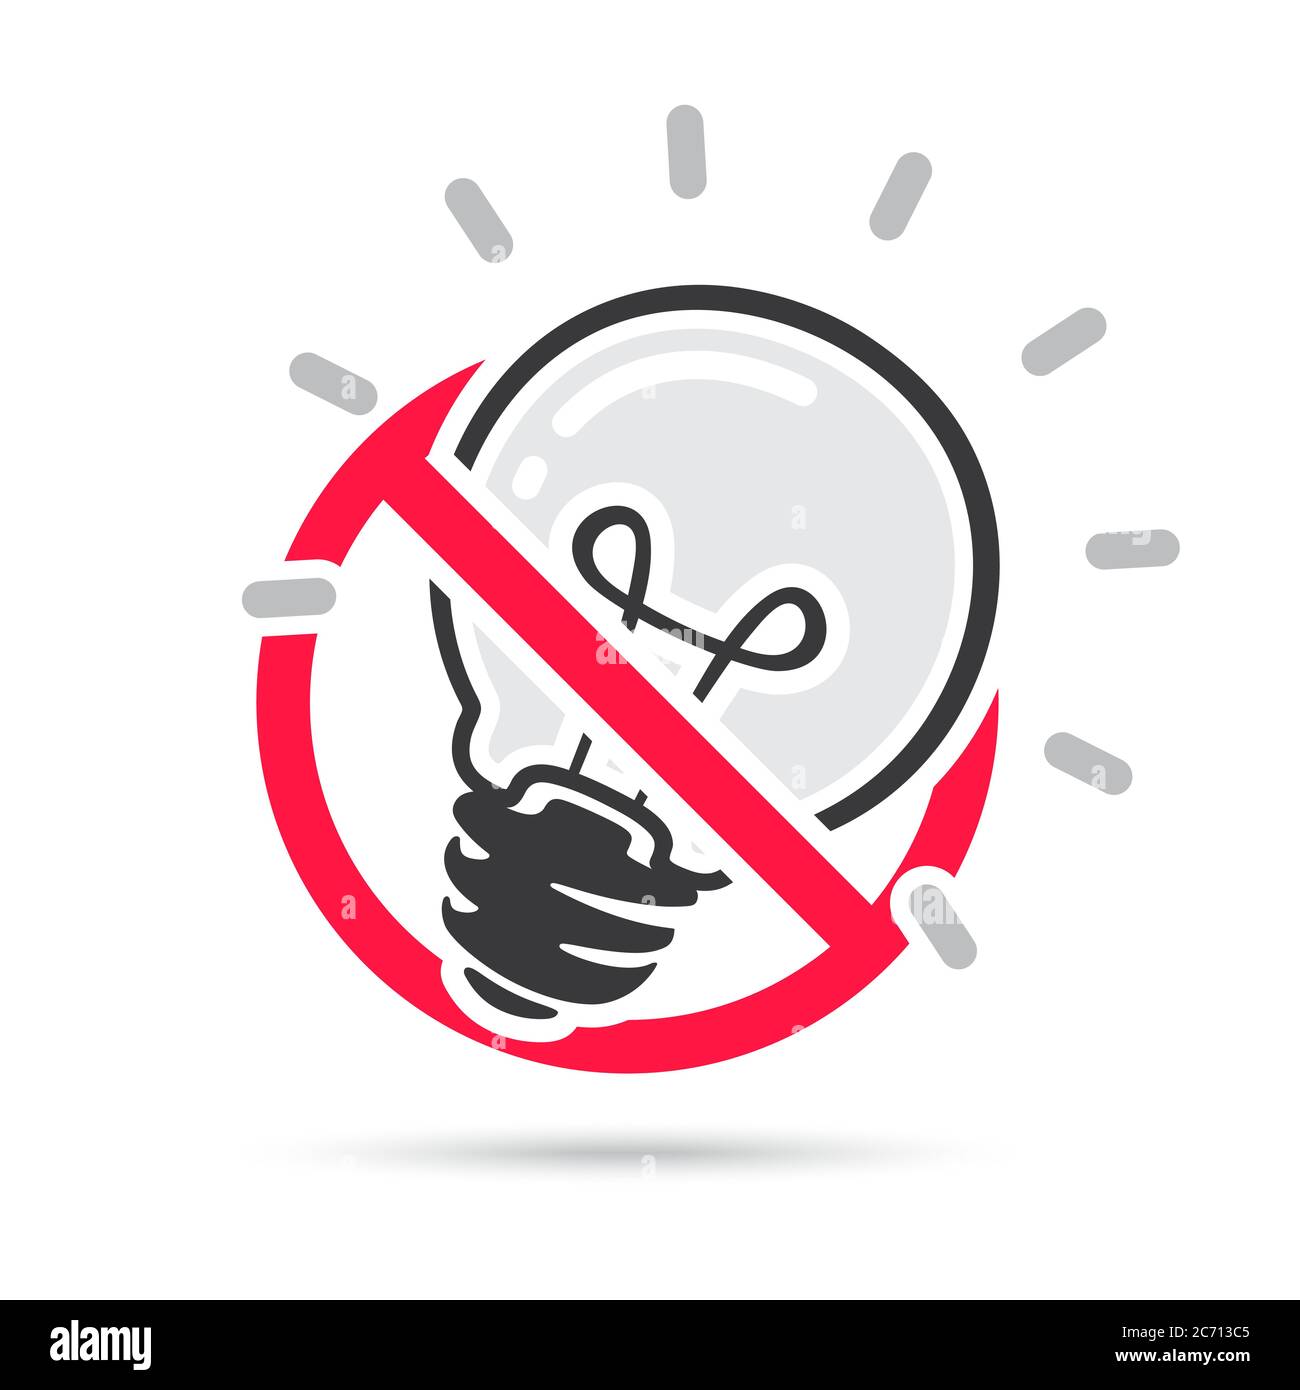 Ideas forbidden vector icon. No idea concept. No light. Isolated on white background. Do not turn on light. Stock Vector